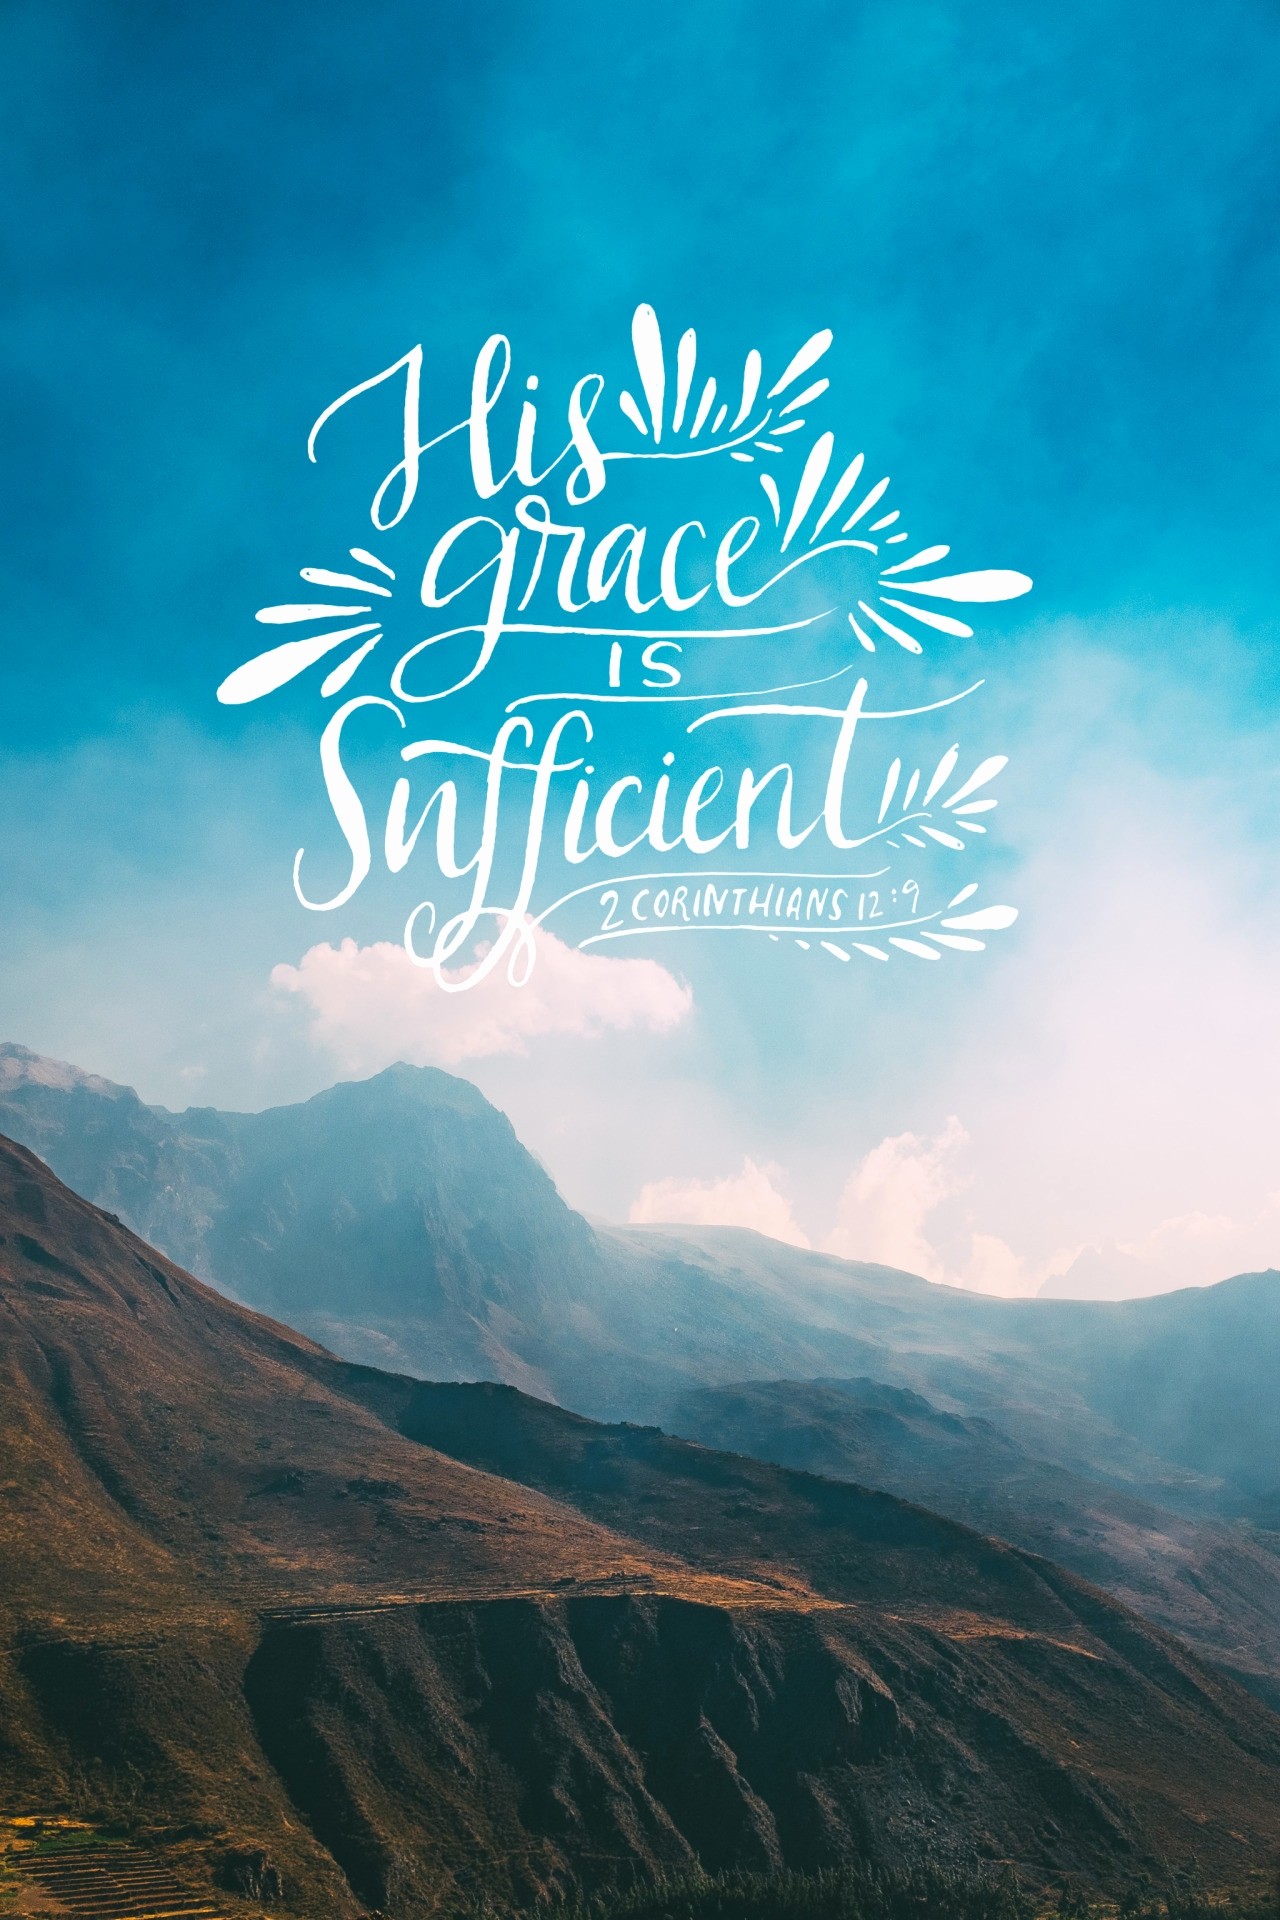 verse wallpaper,sky,font,text,mountain,poster